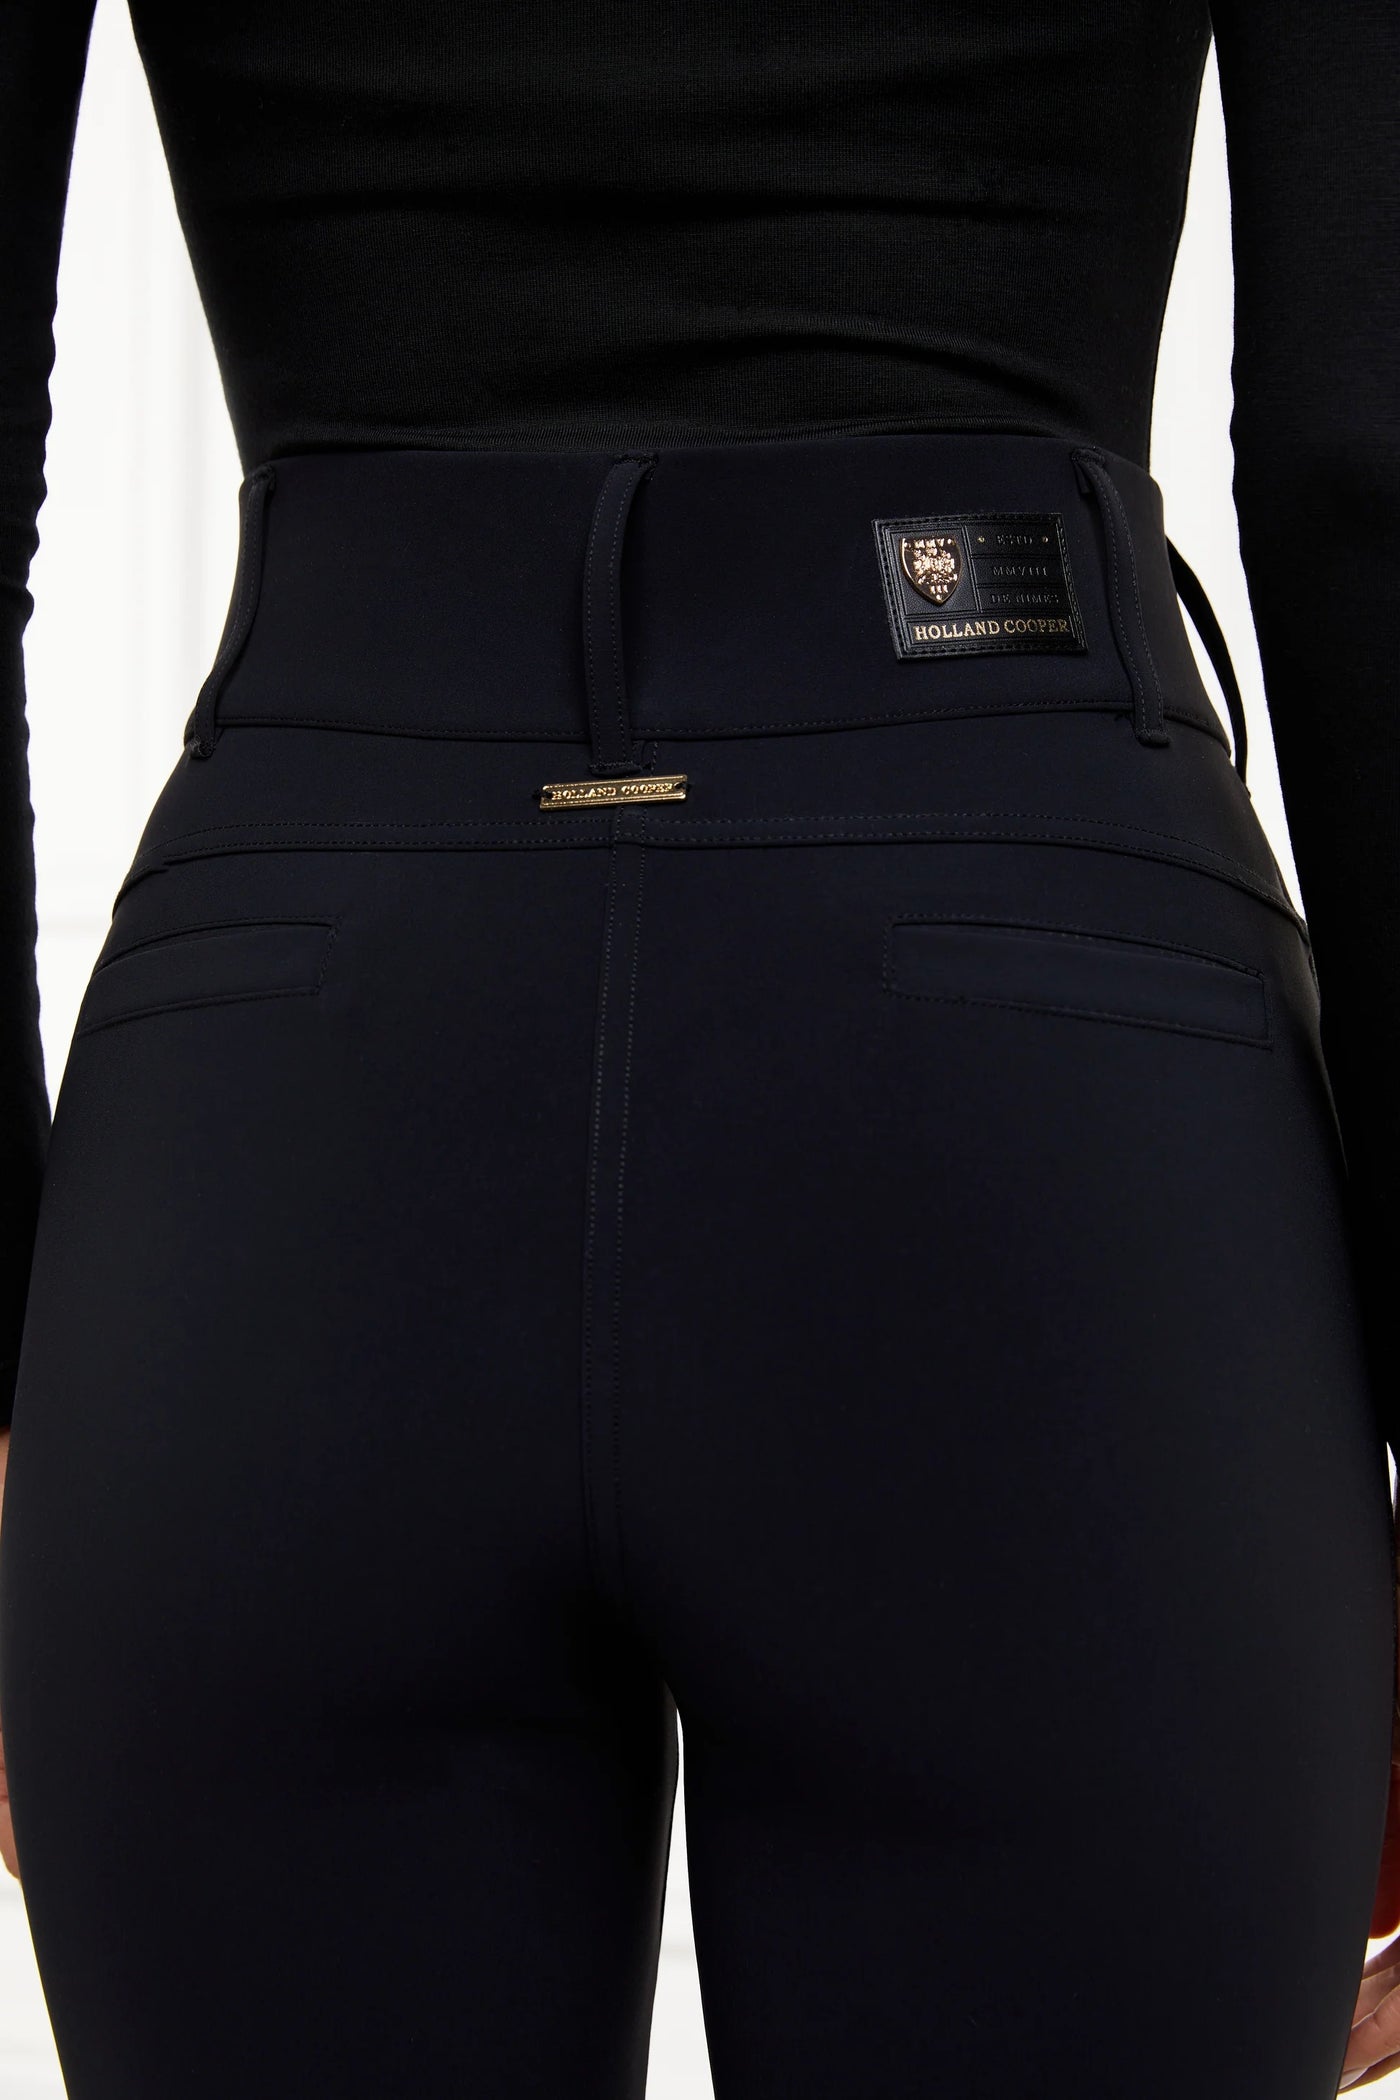 Holland Cooper Contour Trouser in Black Model Back